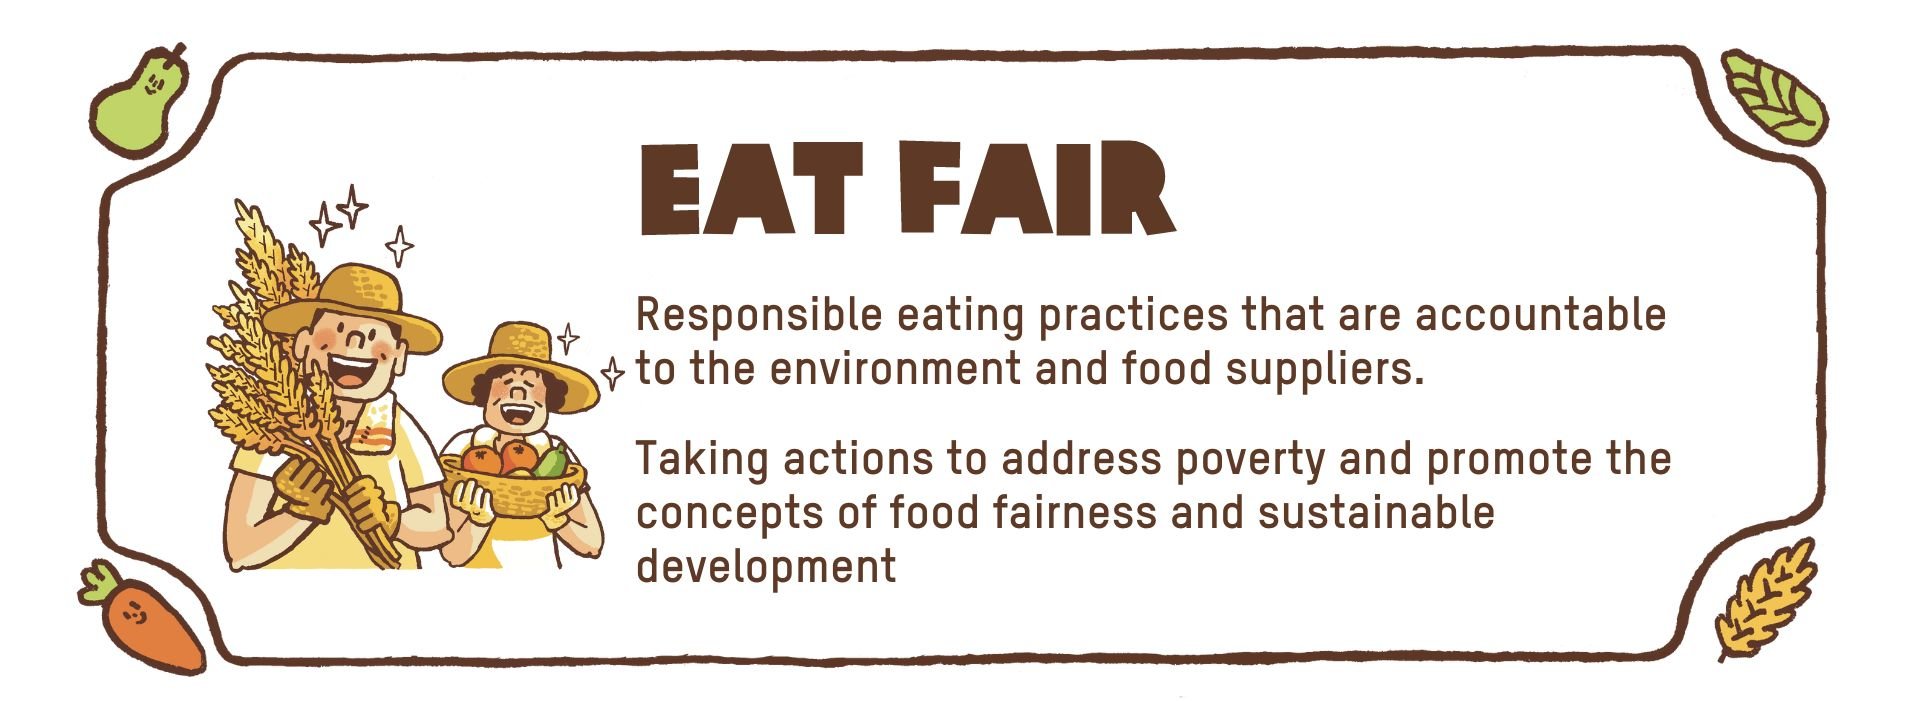 EatFair_definition